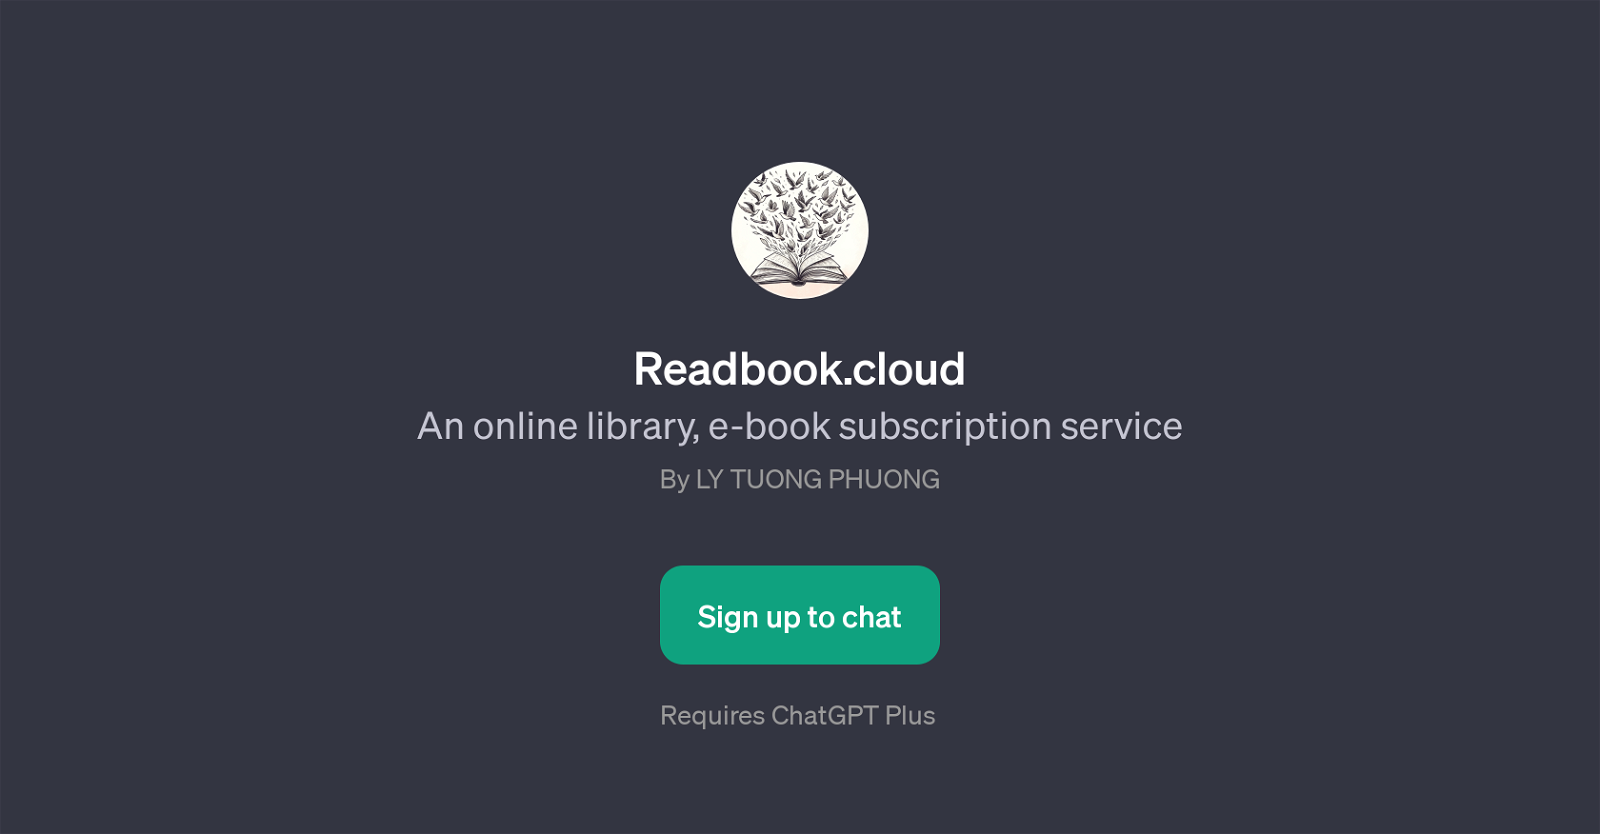 Readbook.cloud website